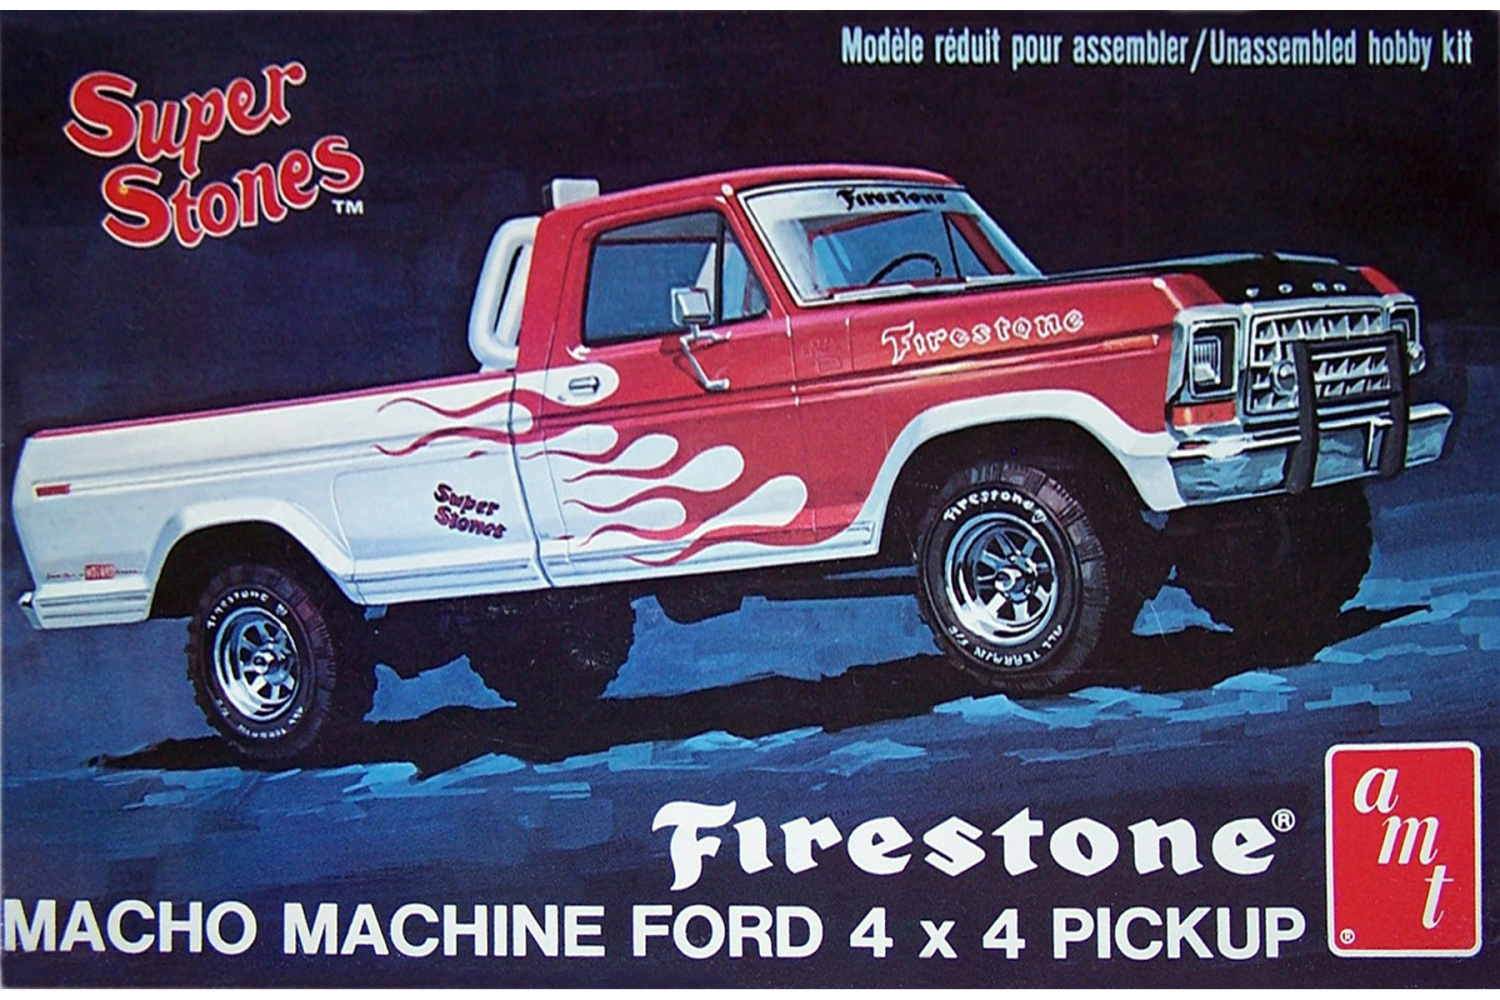 1978 Ford Pickup “Firestone Super Stones”